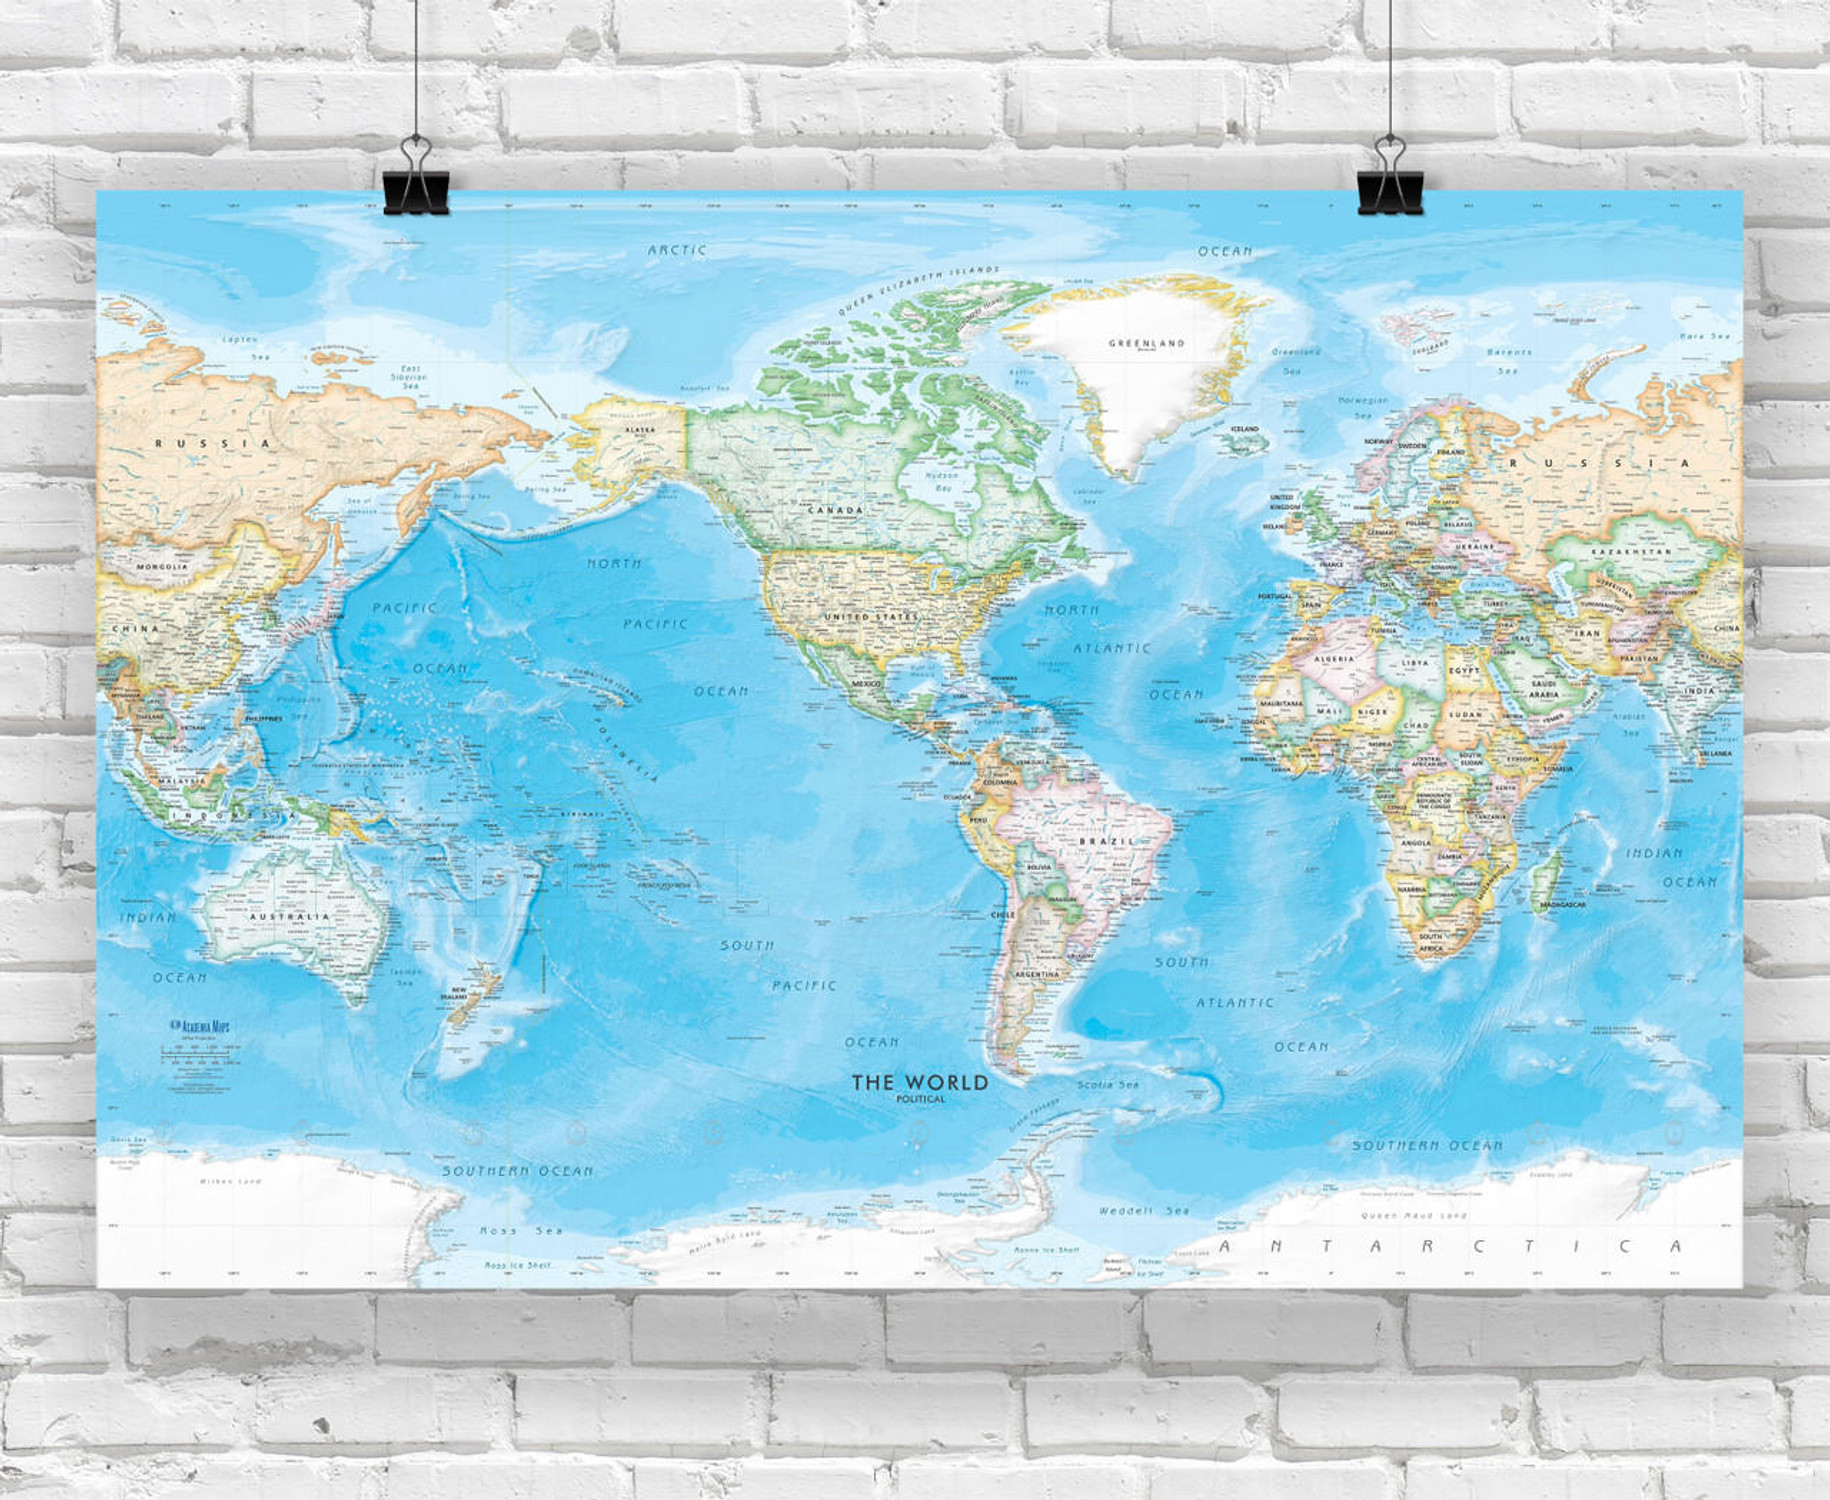 America's Centered Standard Blue Ocean World Political Wall Map, image 1, World Maps Online